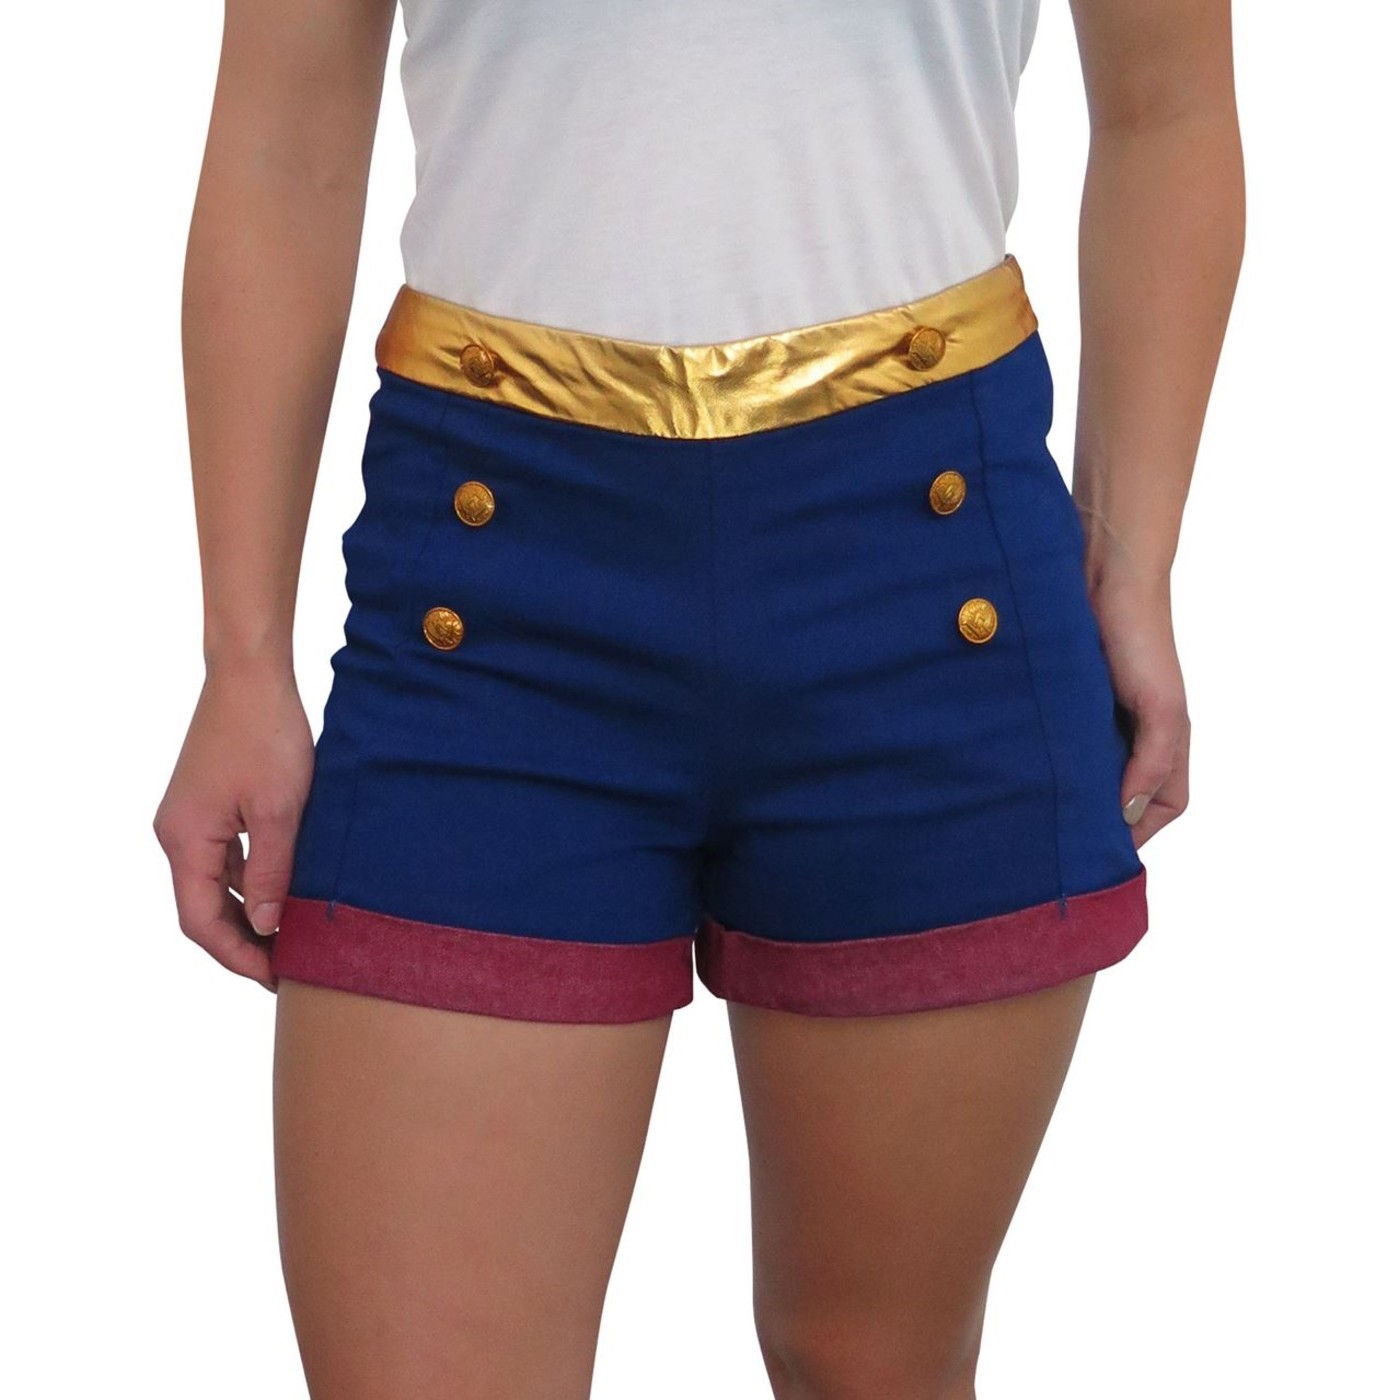 Wonder Woman High Waisted Costume Shorts